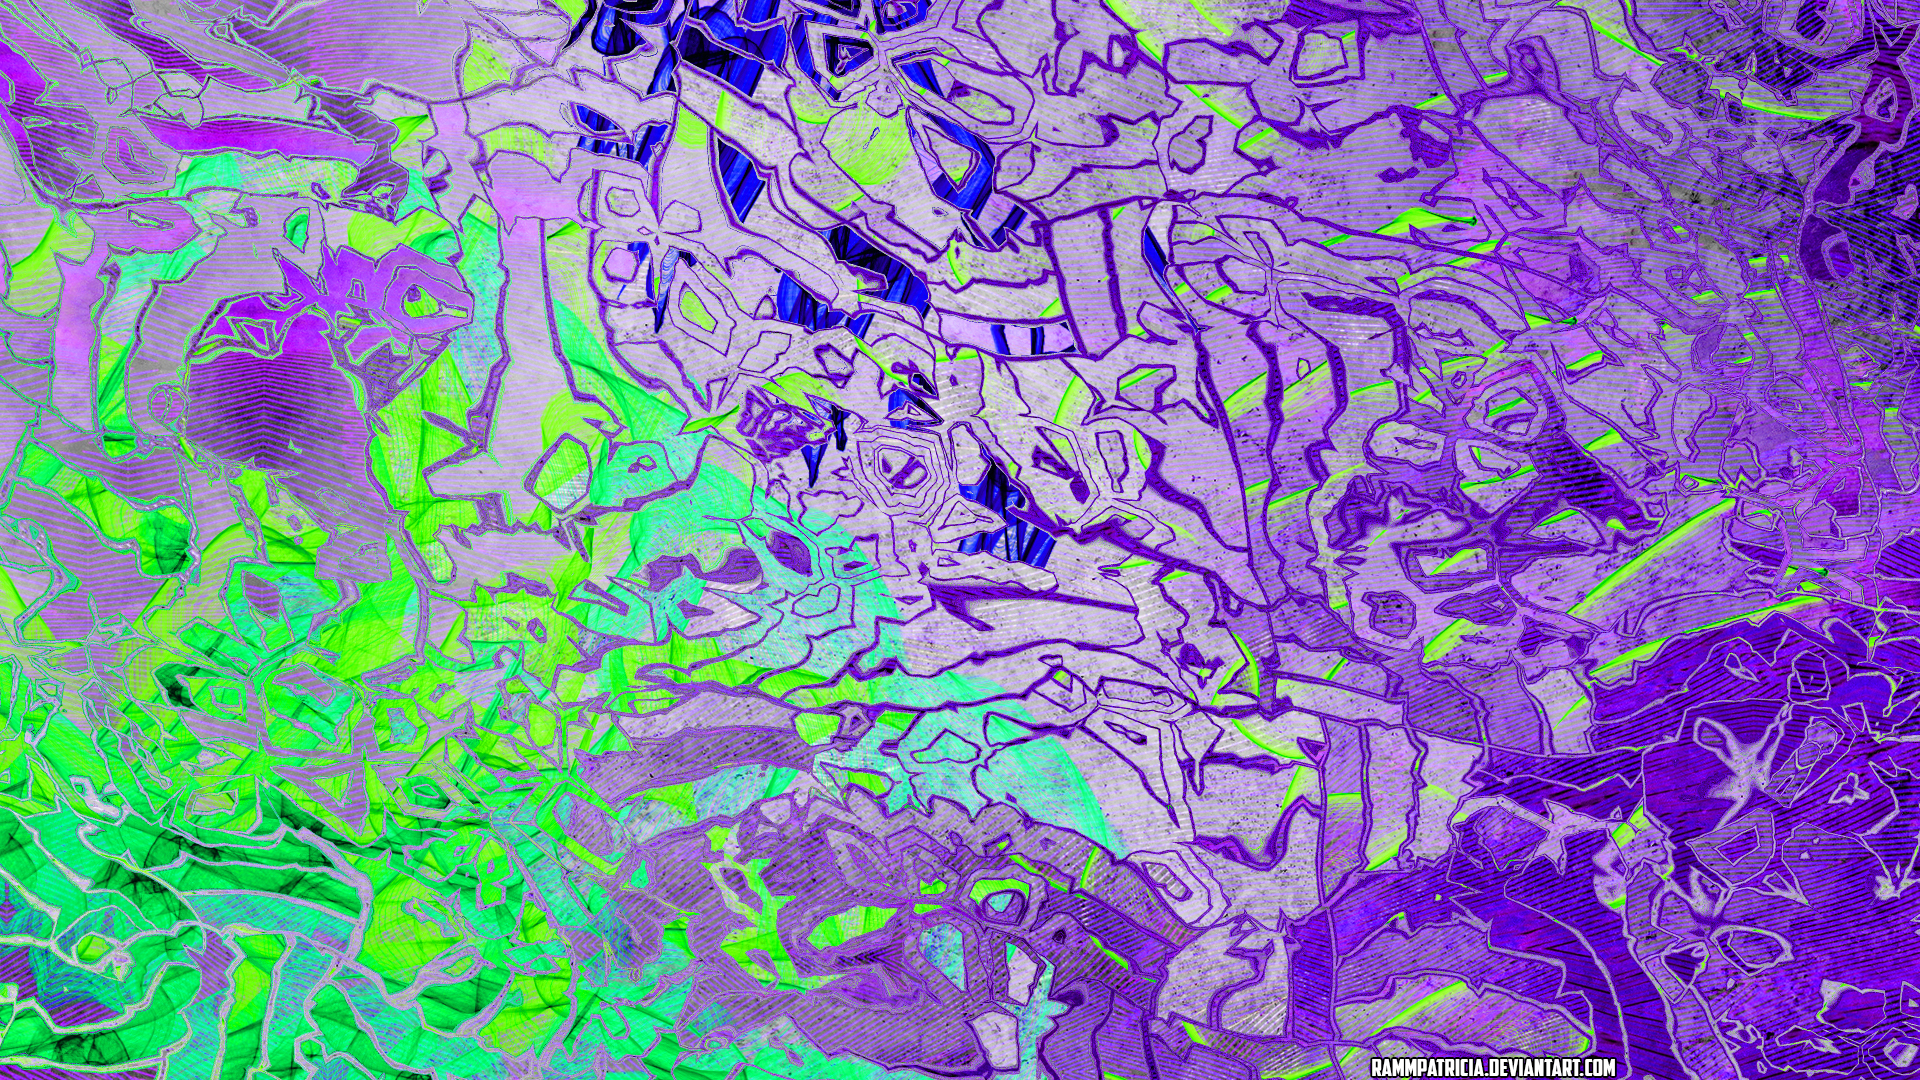 General 1920x1080 digital art RammPatricia abstract lime watermarked purple